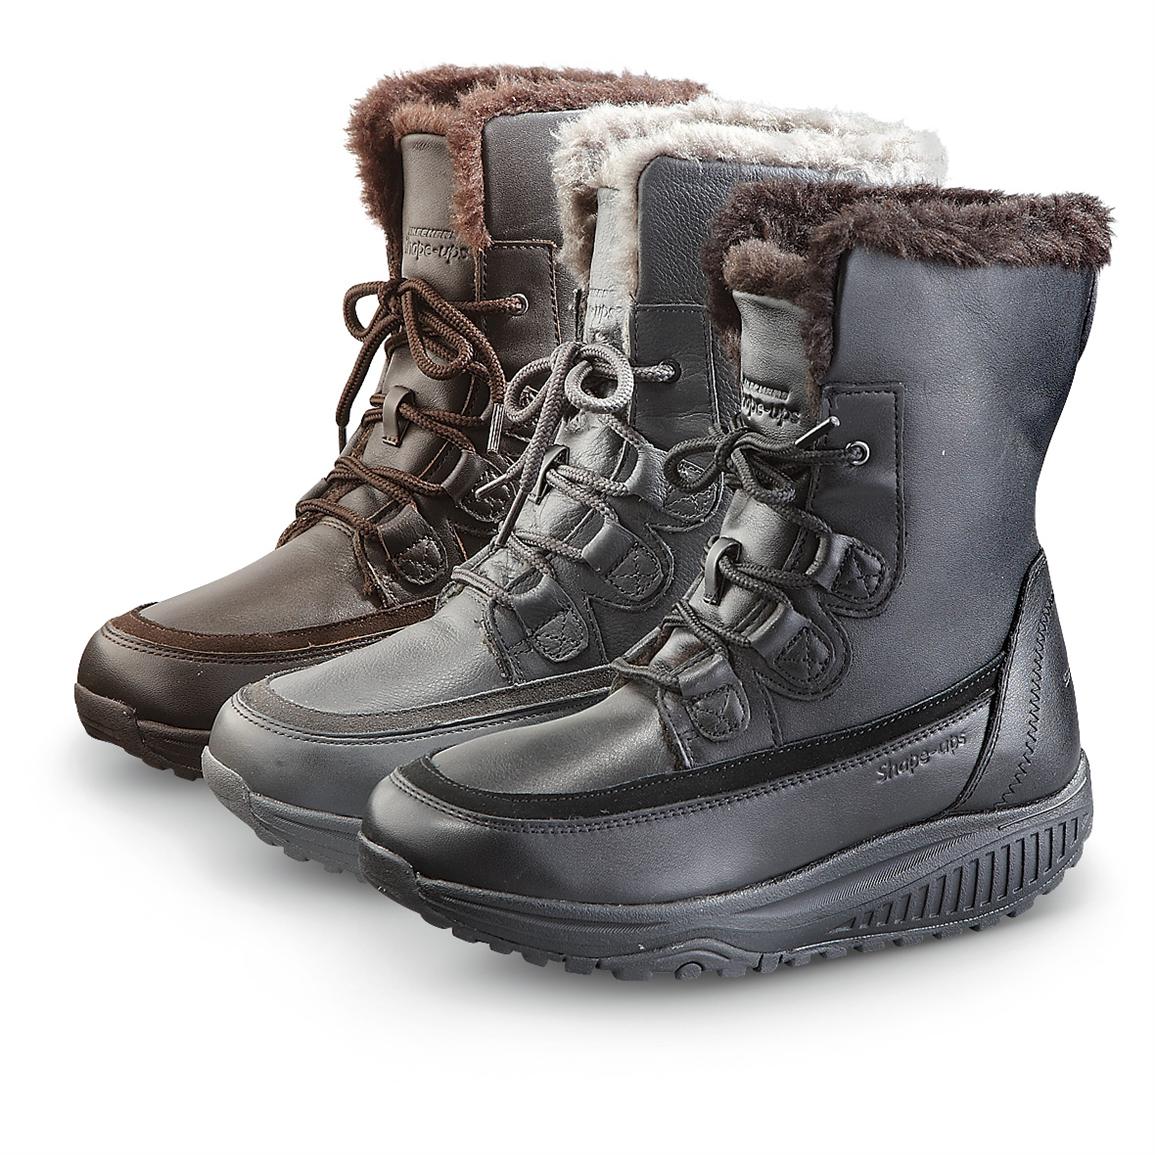 Boots - 212086, Winter \u0026 Snow Boots 